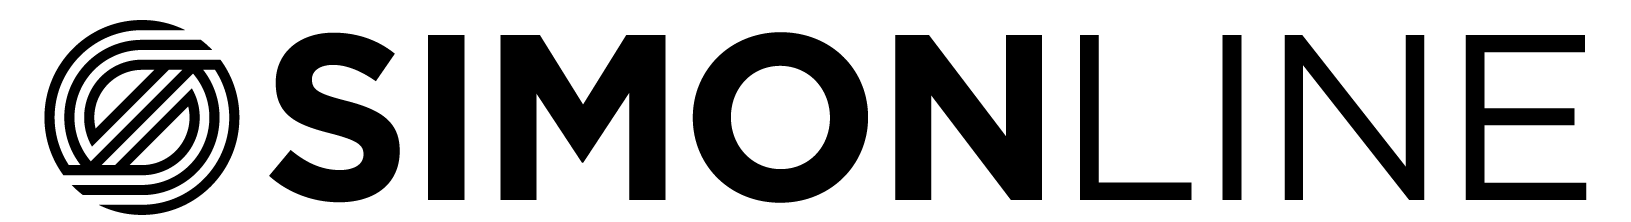 Simon Line Logo